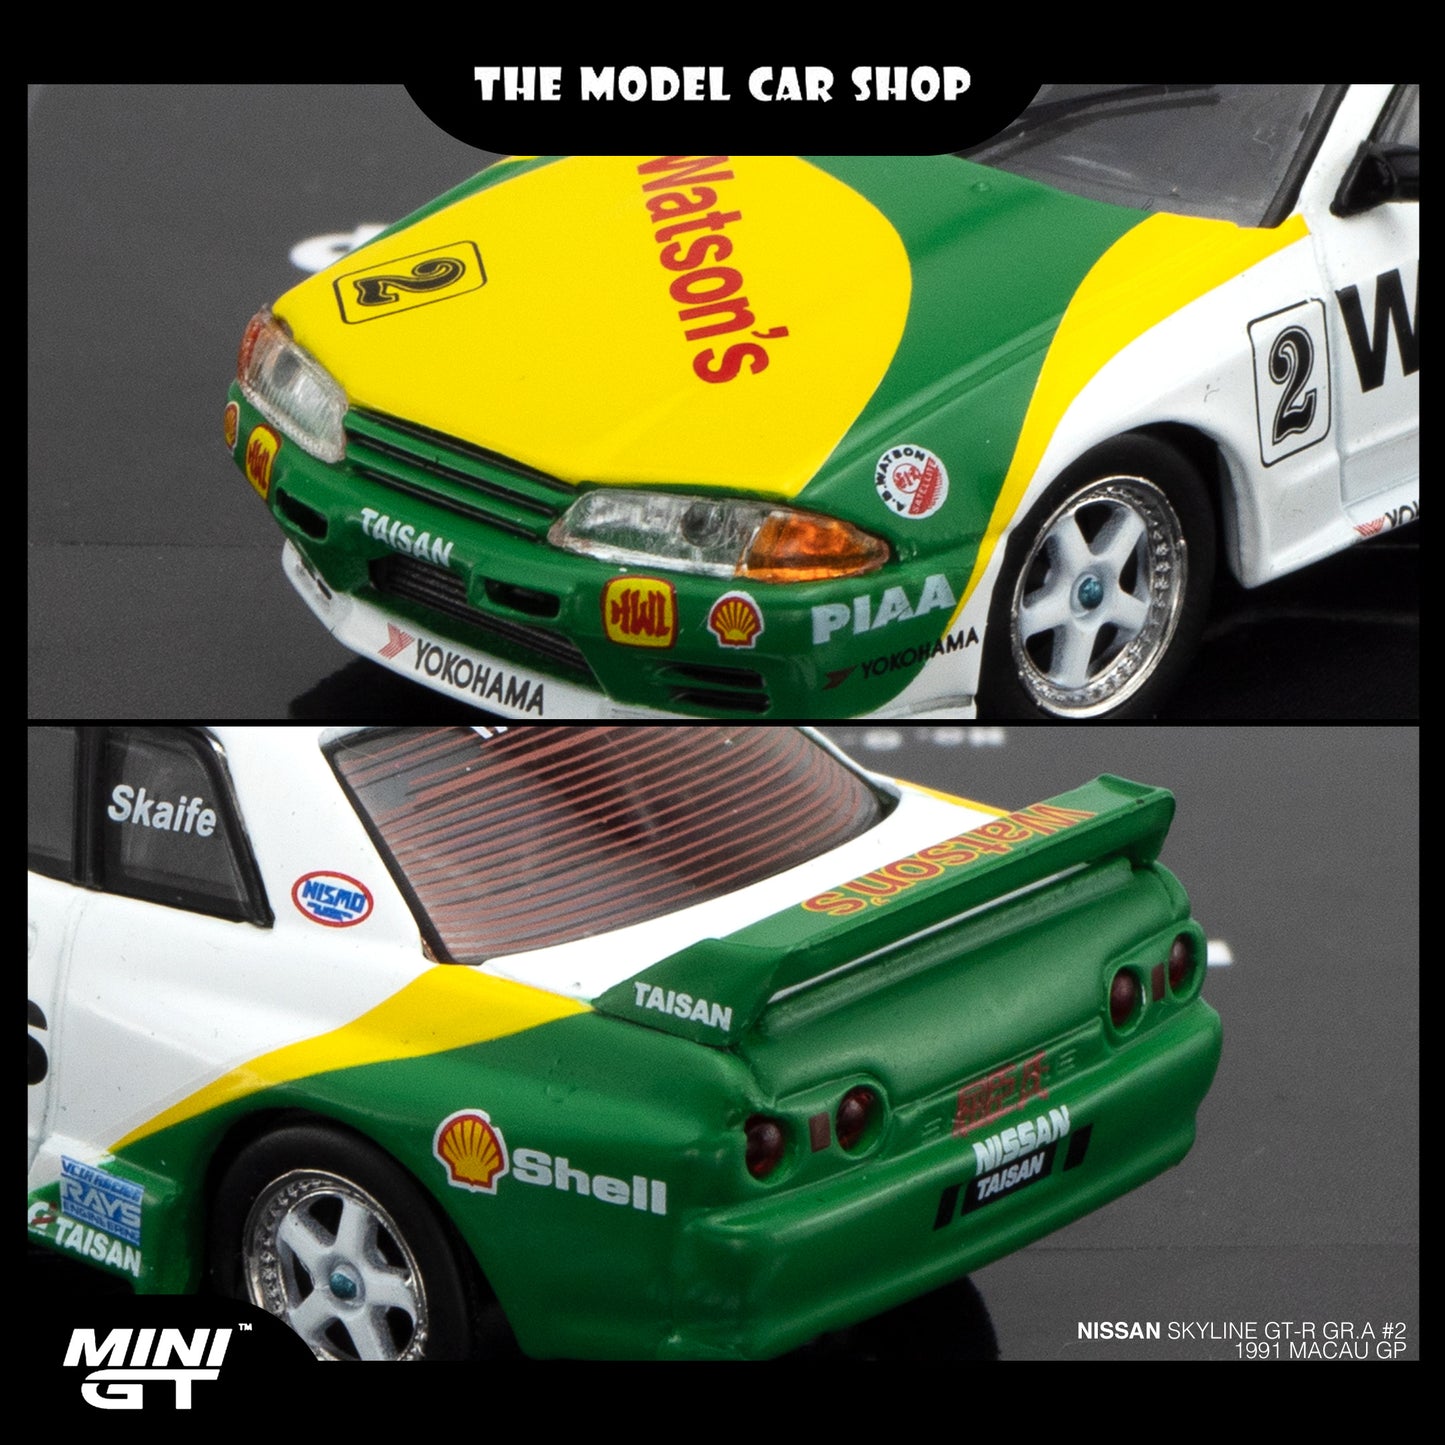 [MINI GT] Nissan Skyline GT-R (R32) GR.A #2 1991 Macau GP